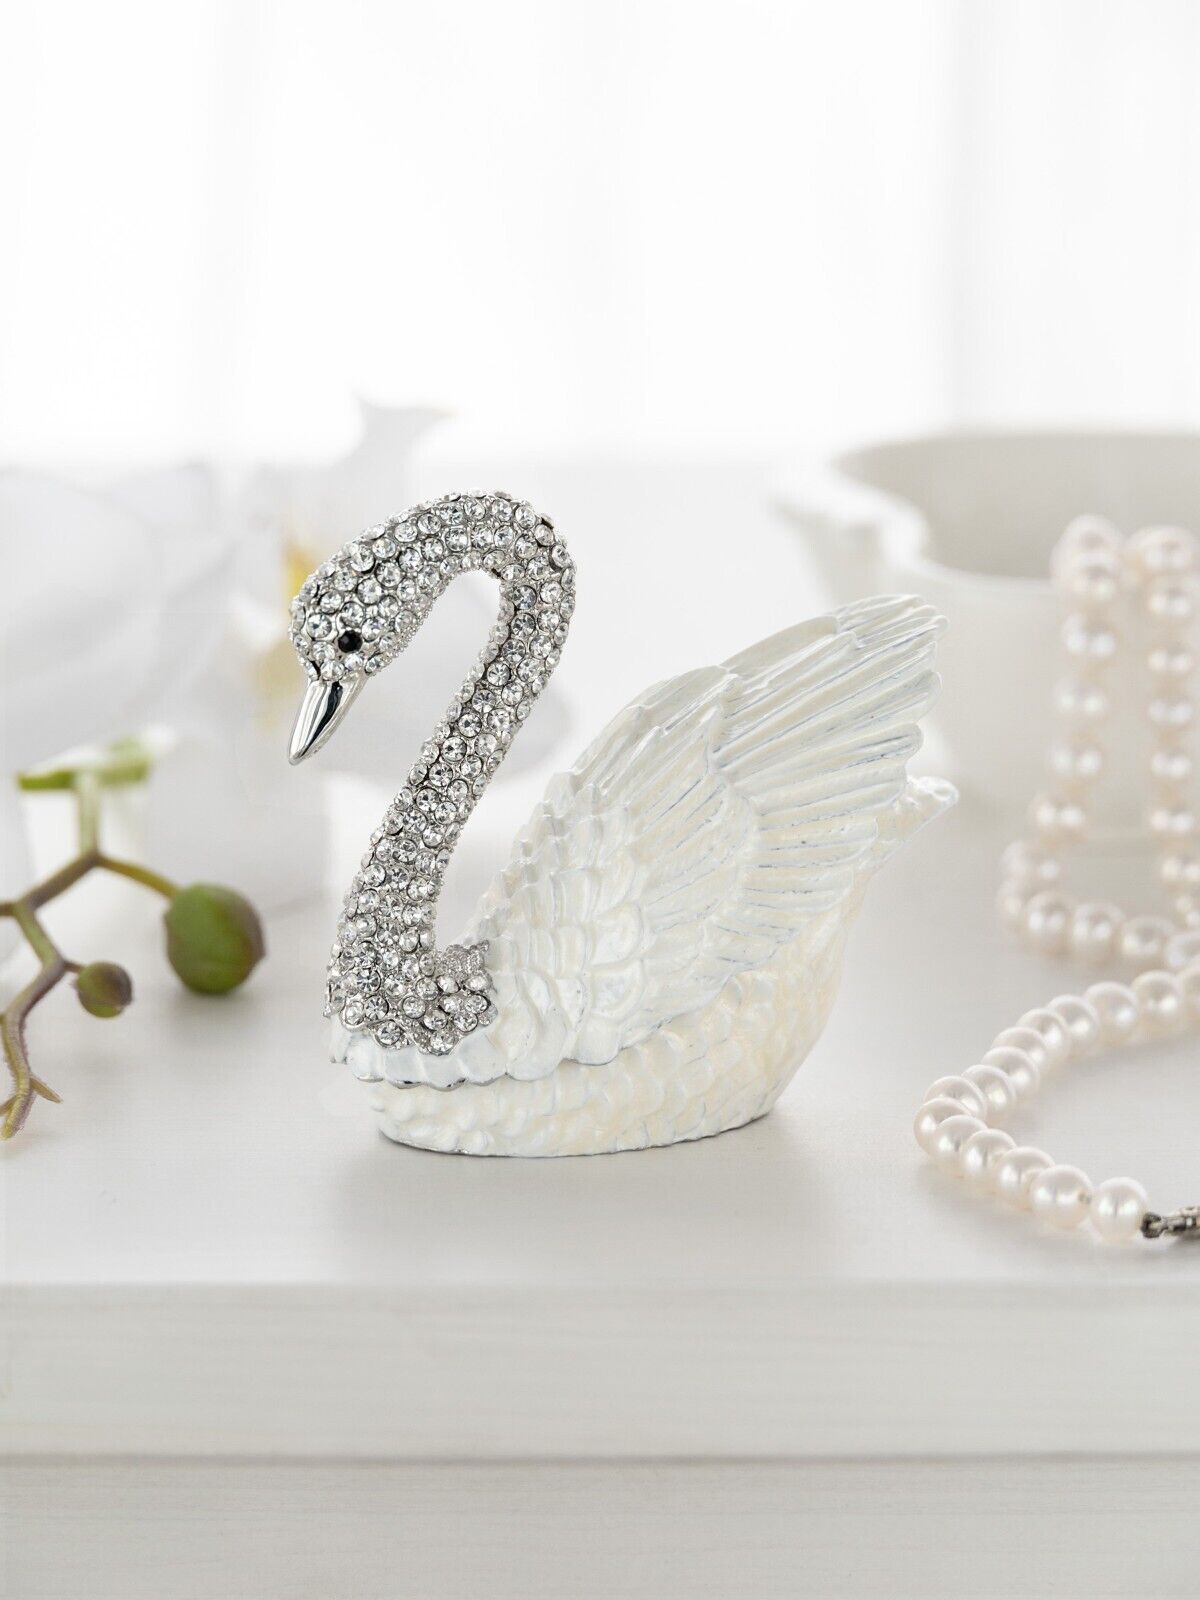 Keren Kopal  white Swan  Trinket Box Hand made Decorated with Austrian Crystals